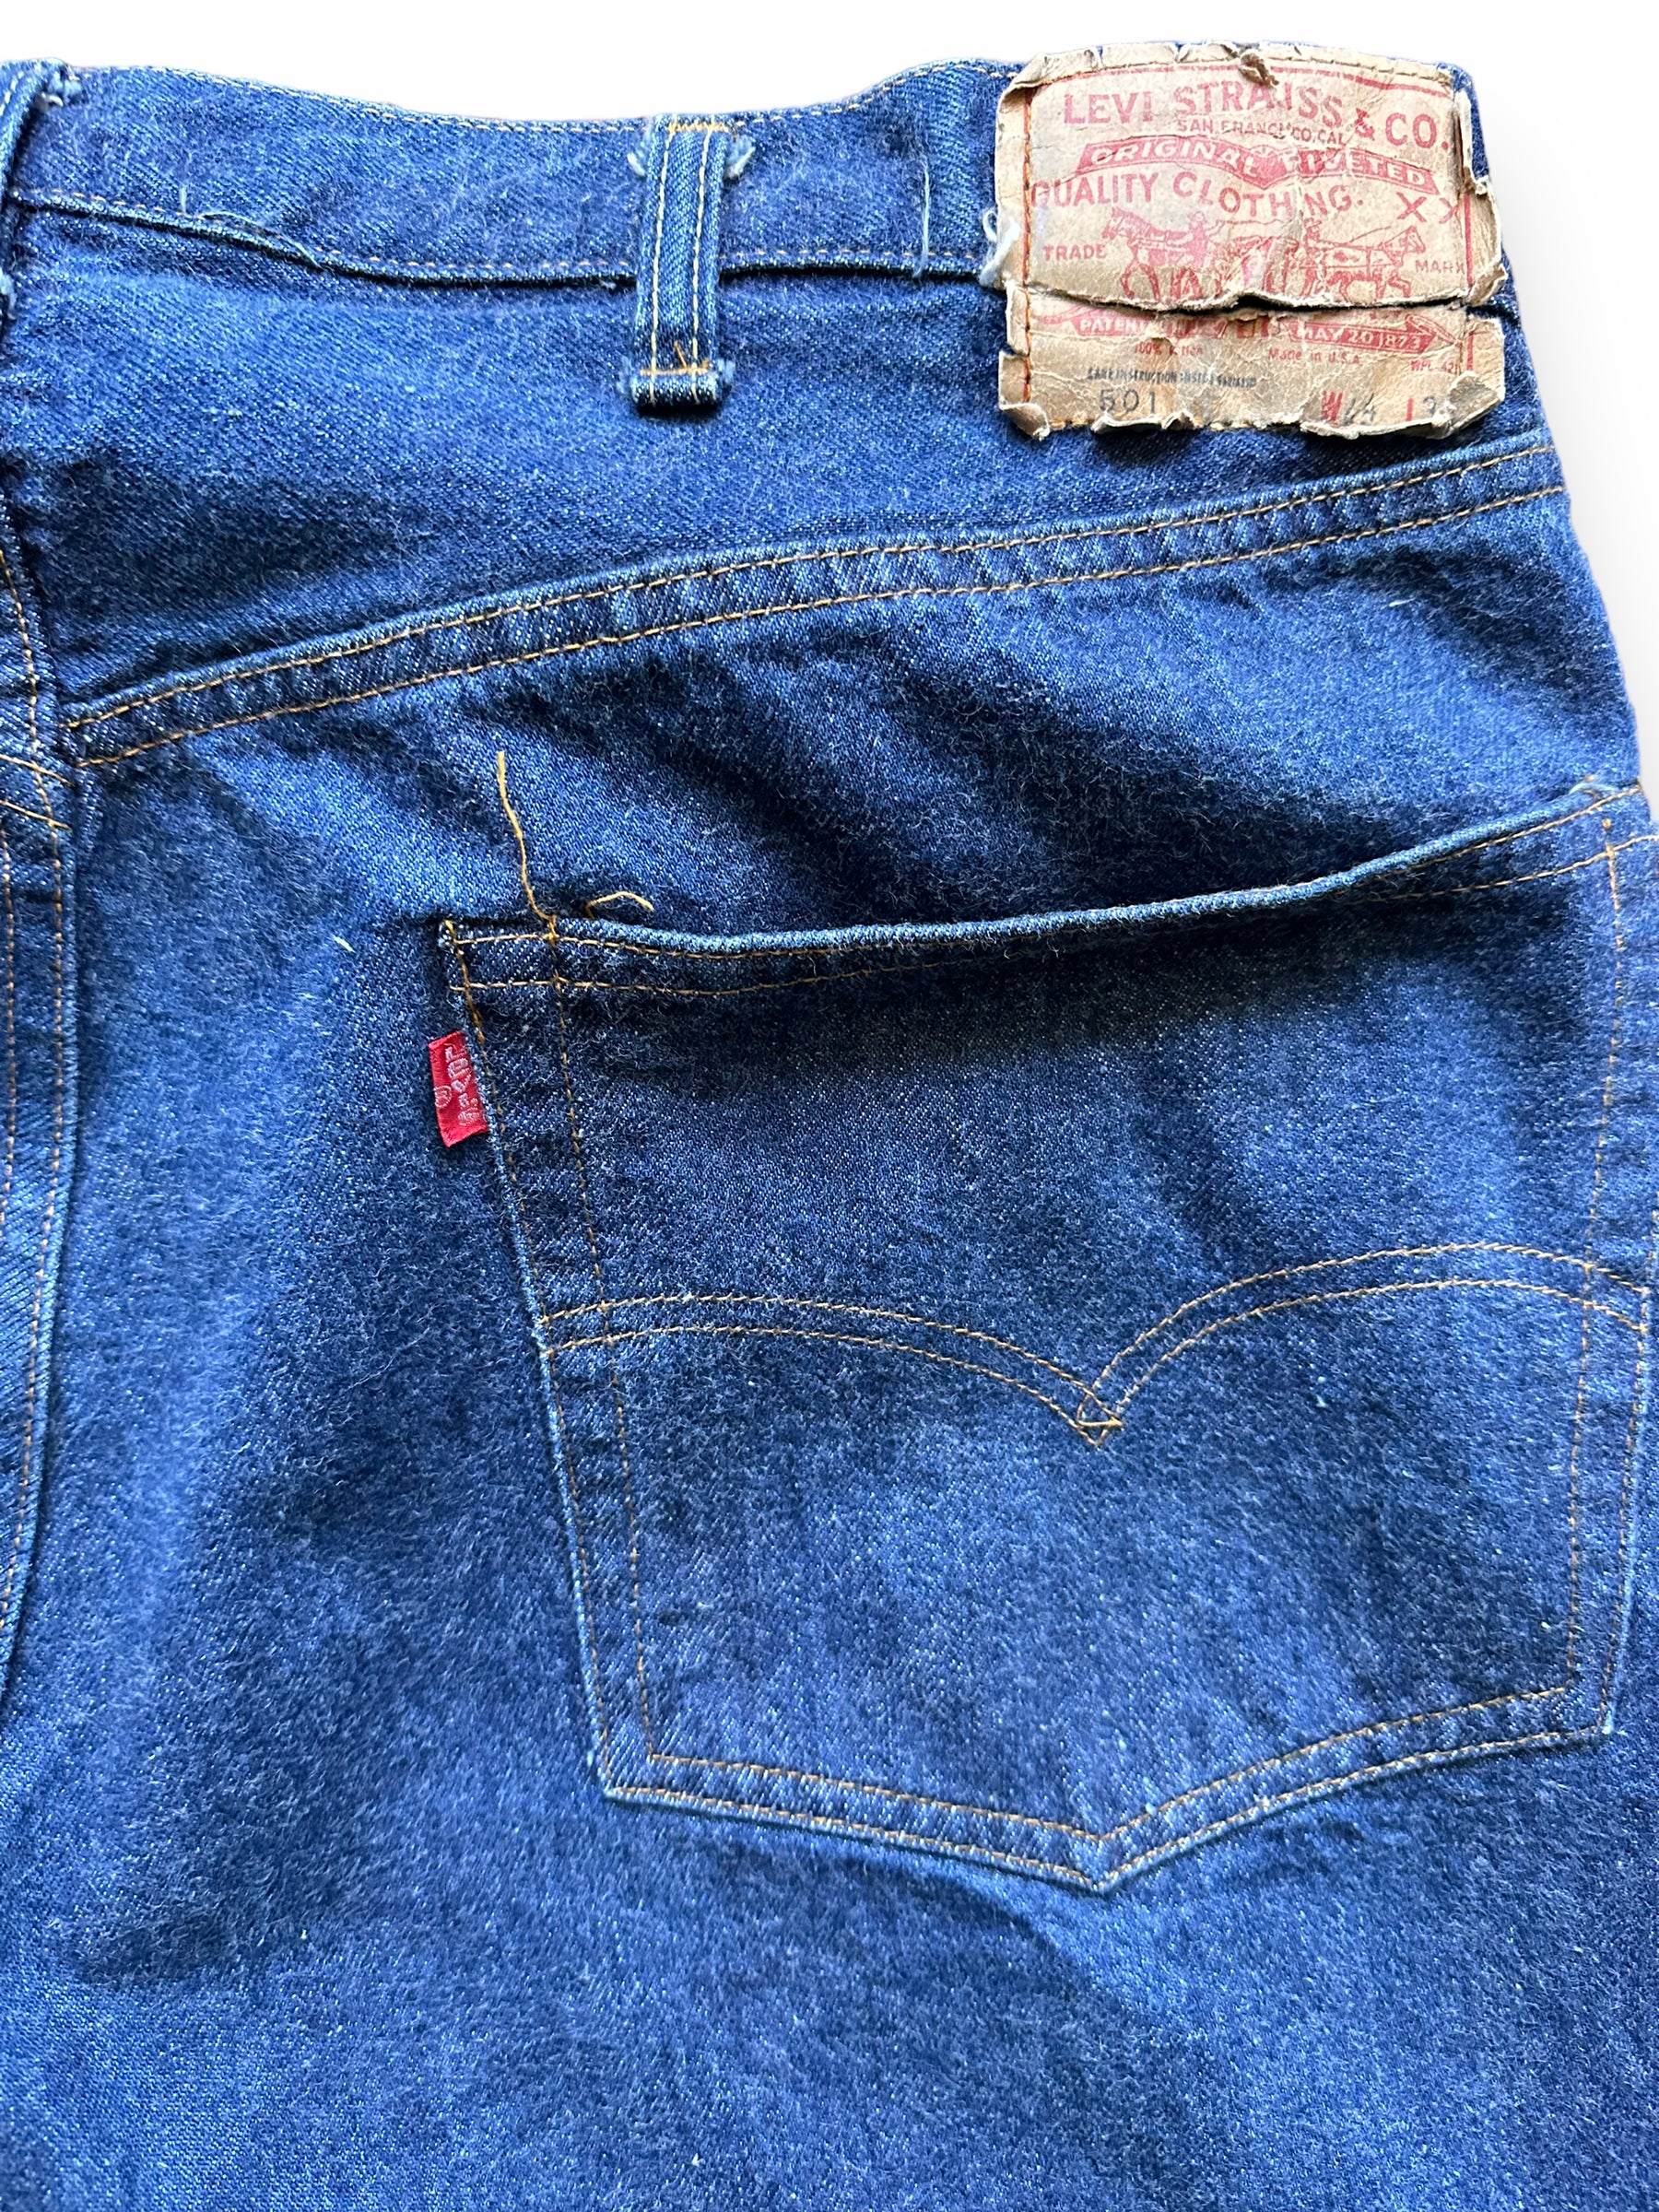 Rear Pocket/Tag View of Vintage Double Stitch Levi's 501 Redlines W41 | Vintage Selvedge Denim Seattle | Barn Owl Vintage Workwear